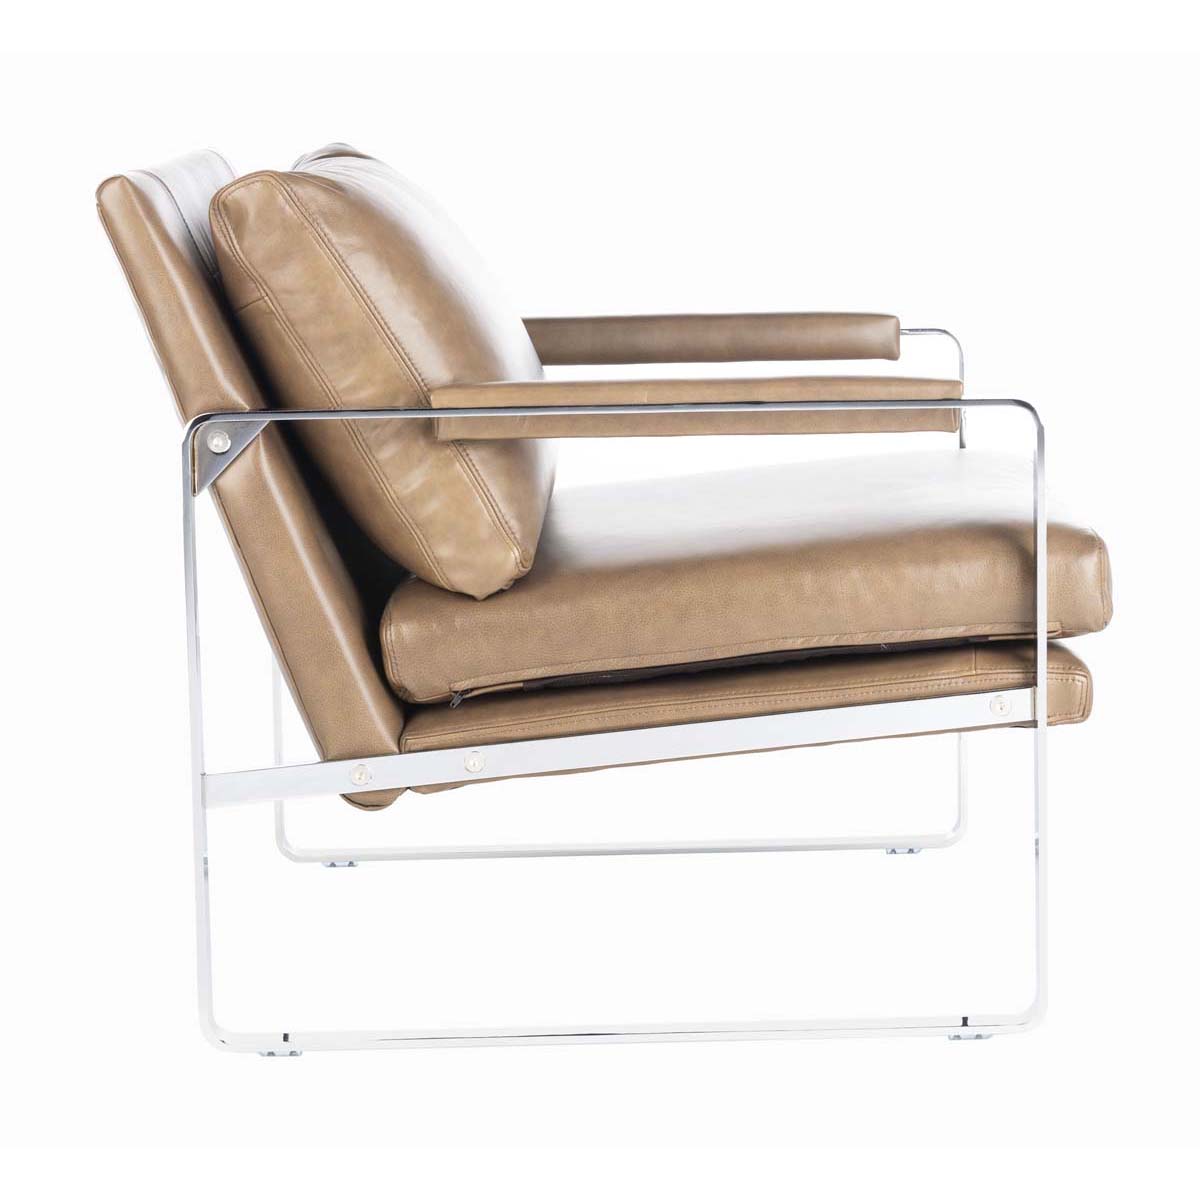 Safavieh Couture Esposito Metal Accent Chair - Dark Brown / Silver